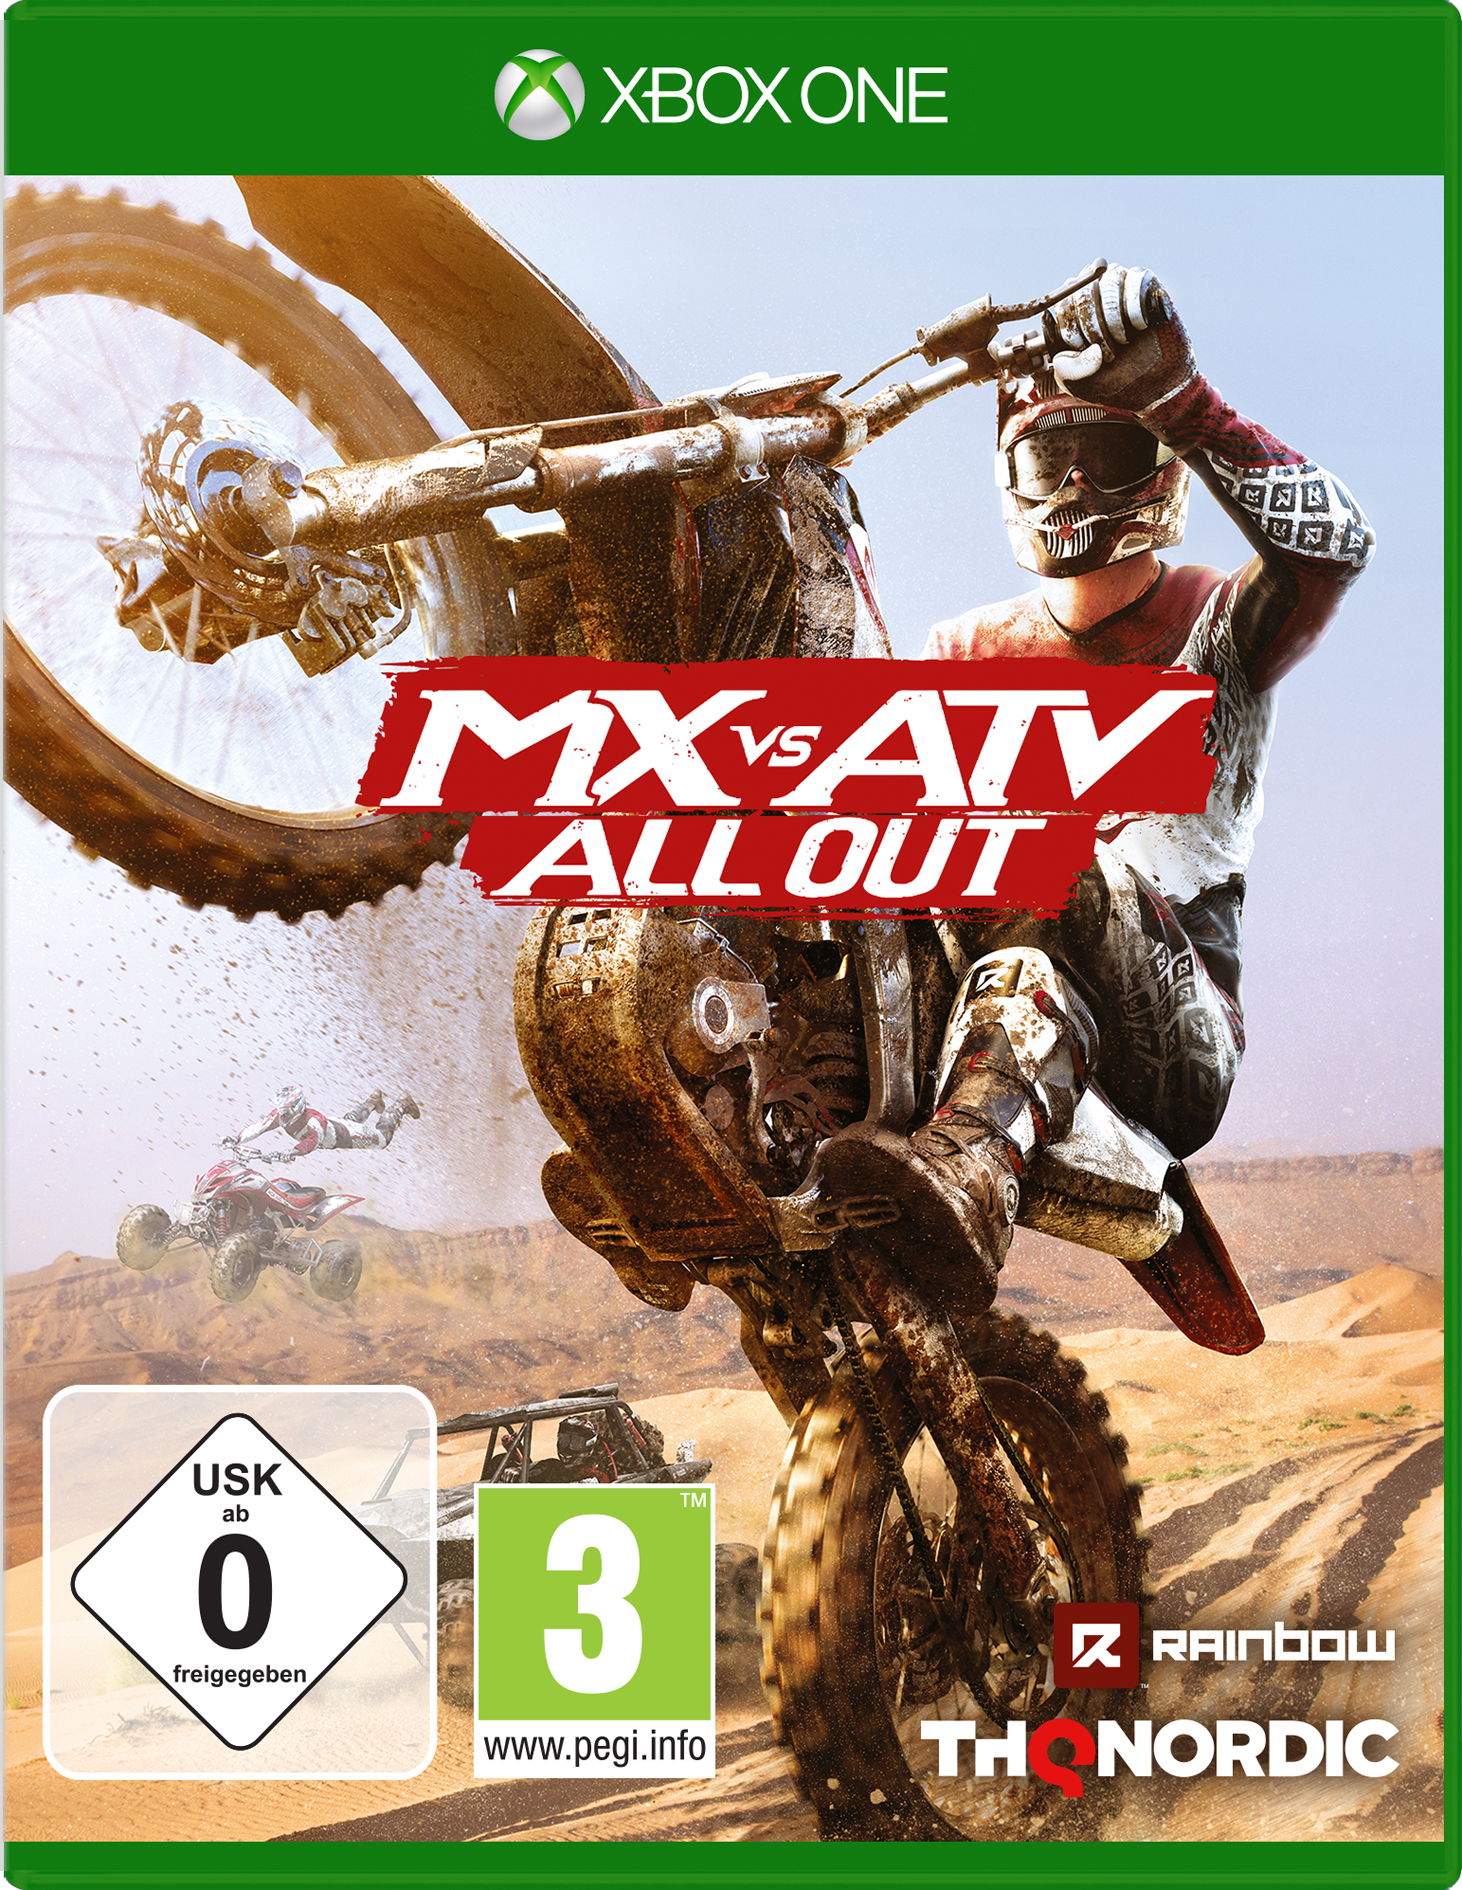 MX All - [Xbox One] vs. ATV Out